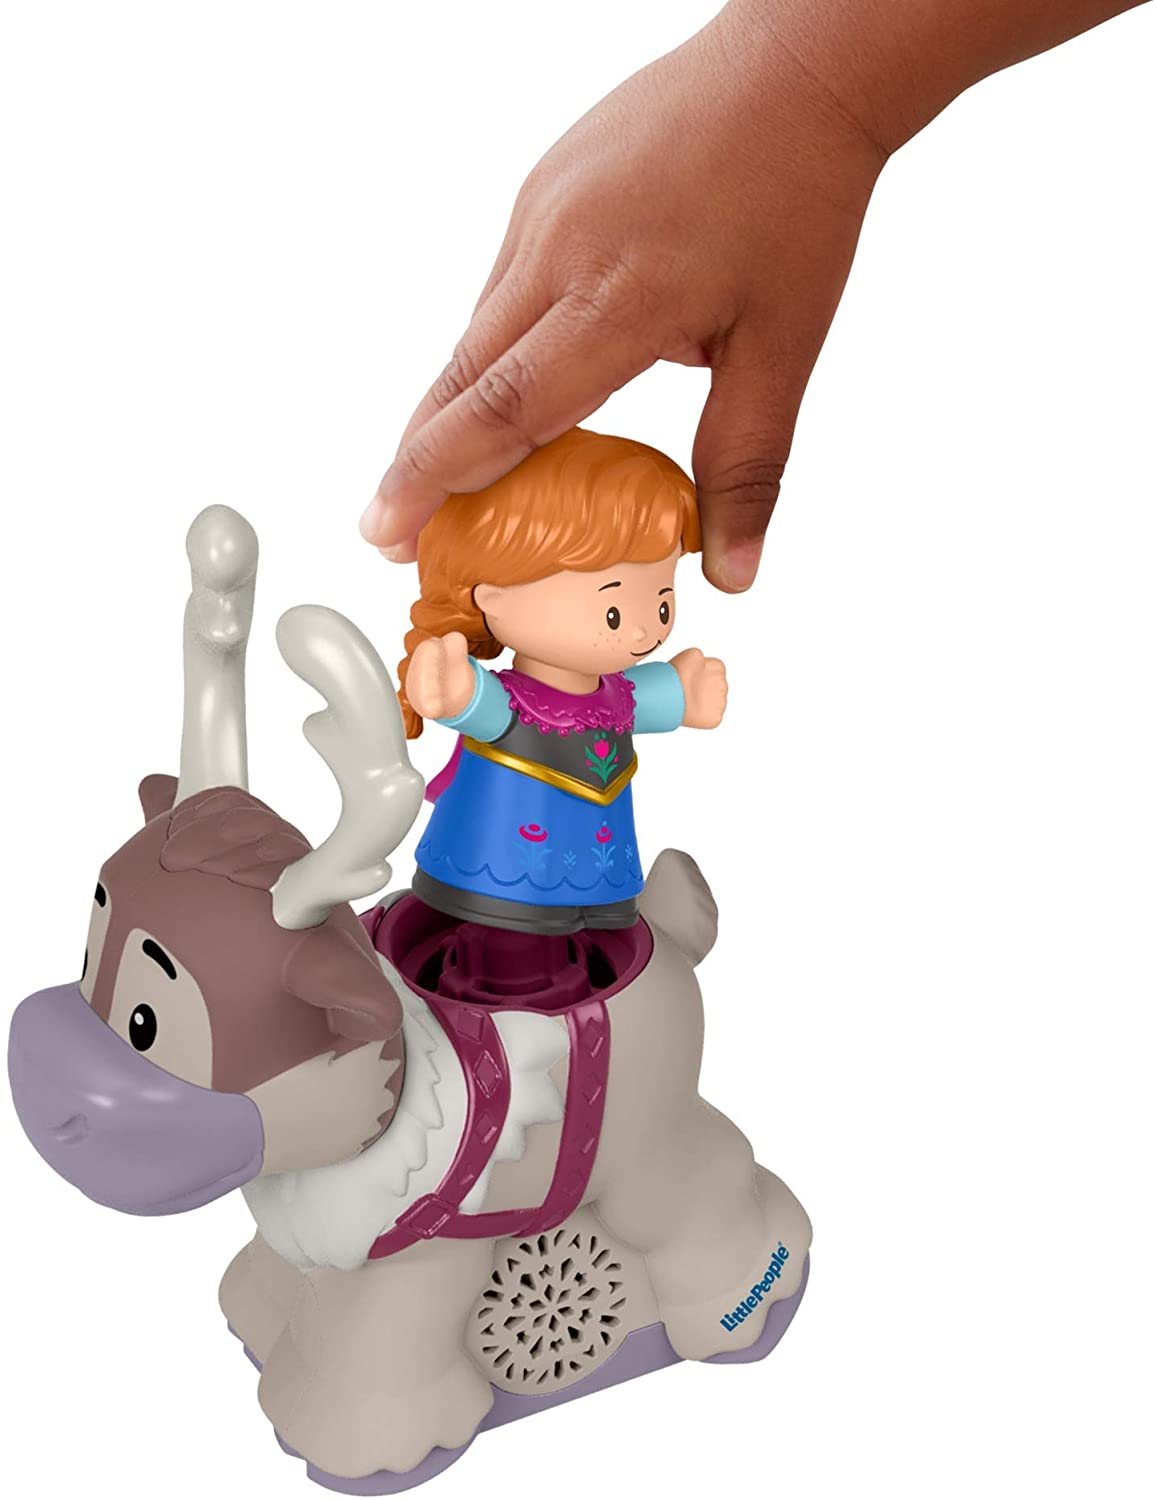 Fisher-Price Disney Frozen Anna & Sven Reindeer by Little People